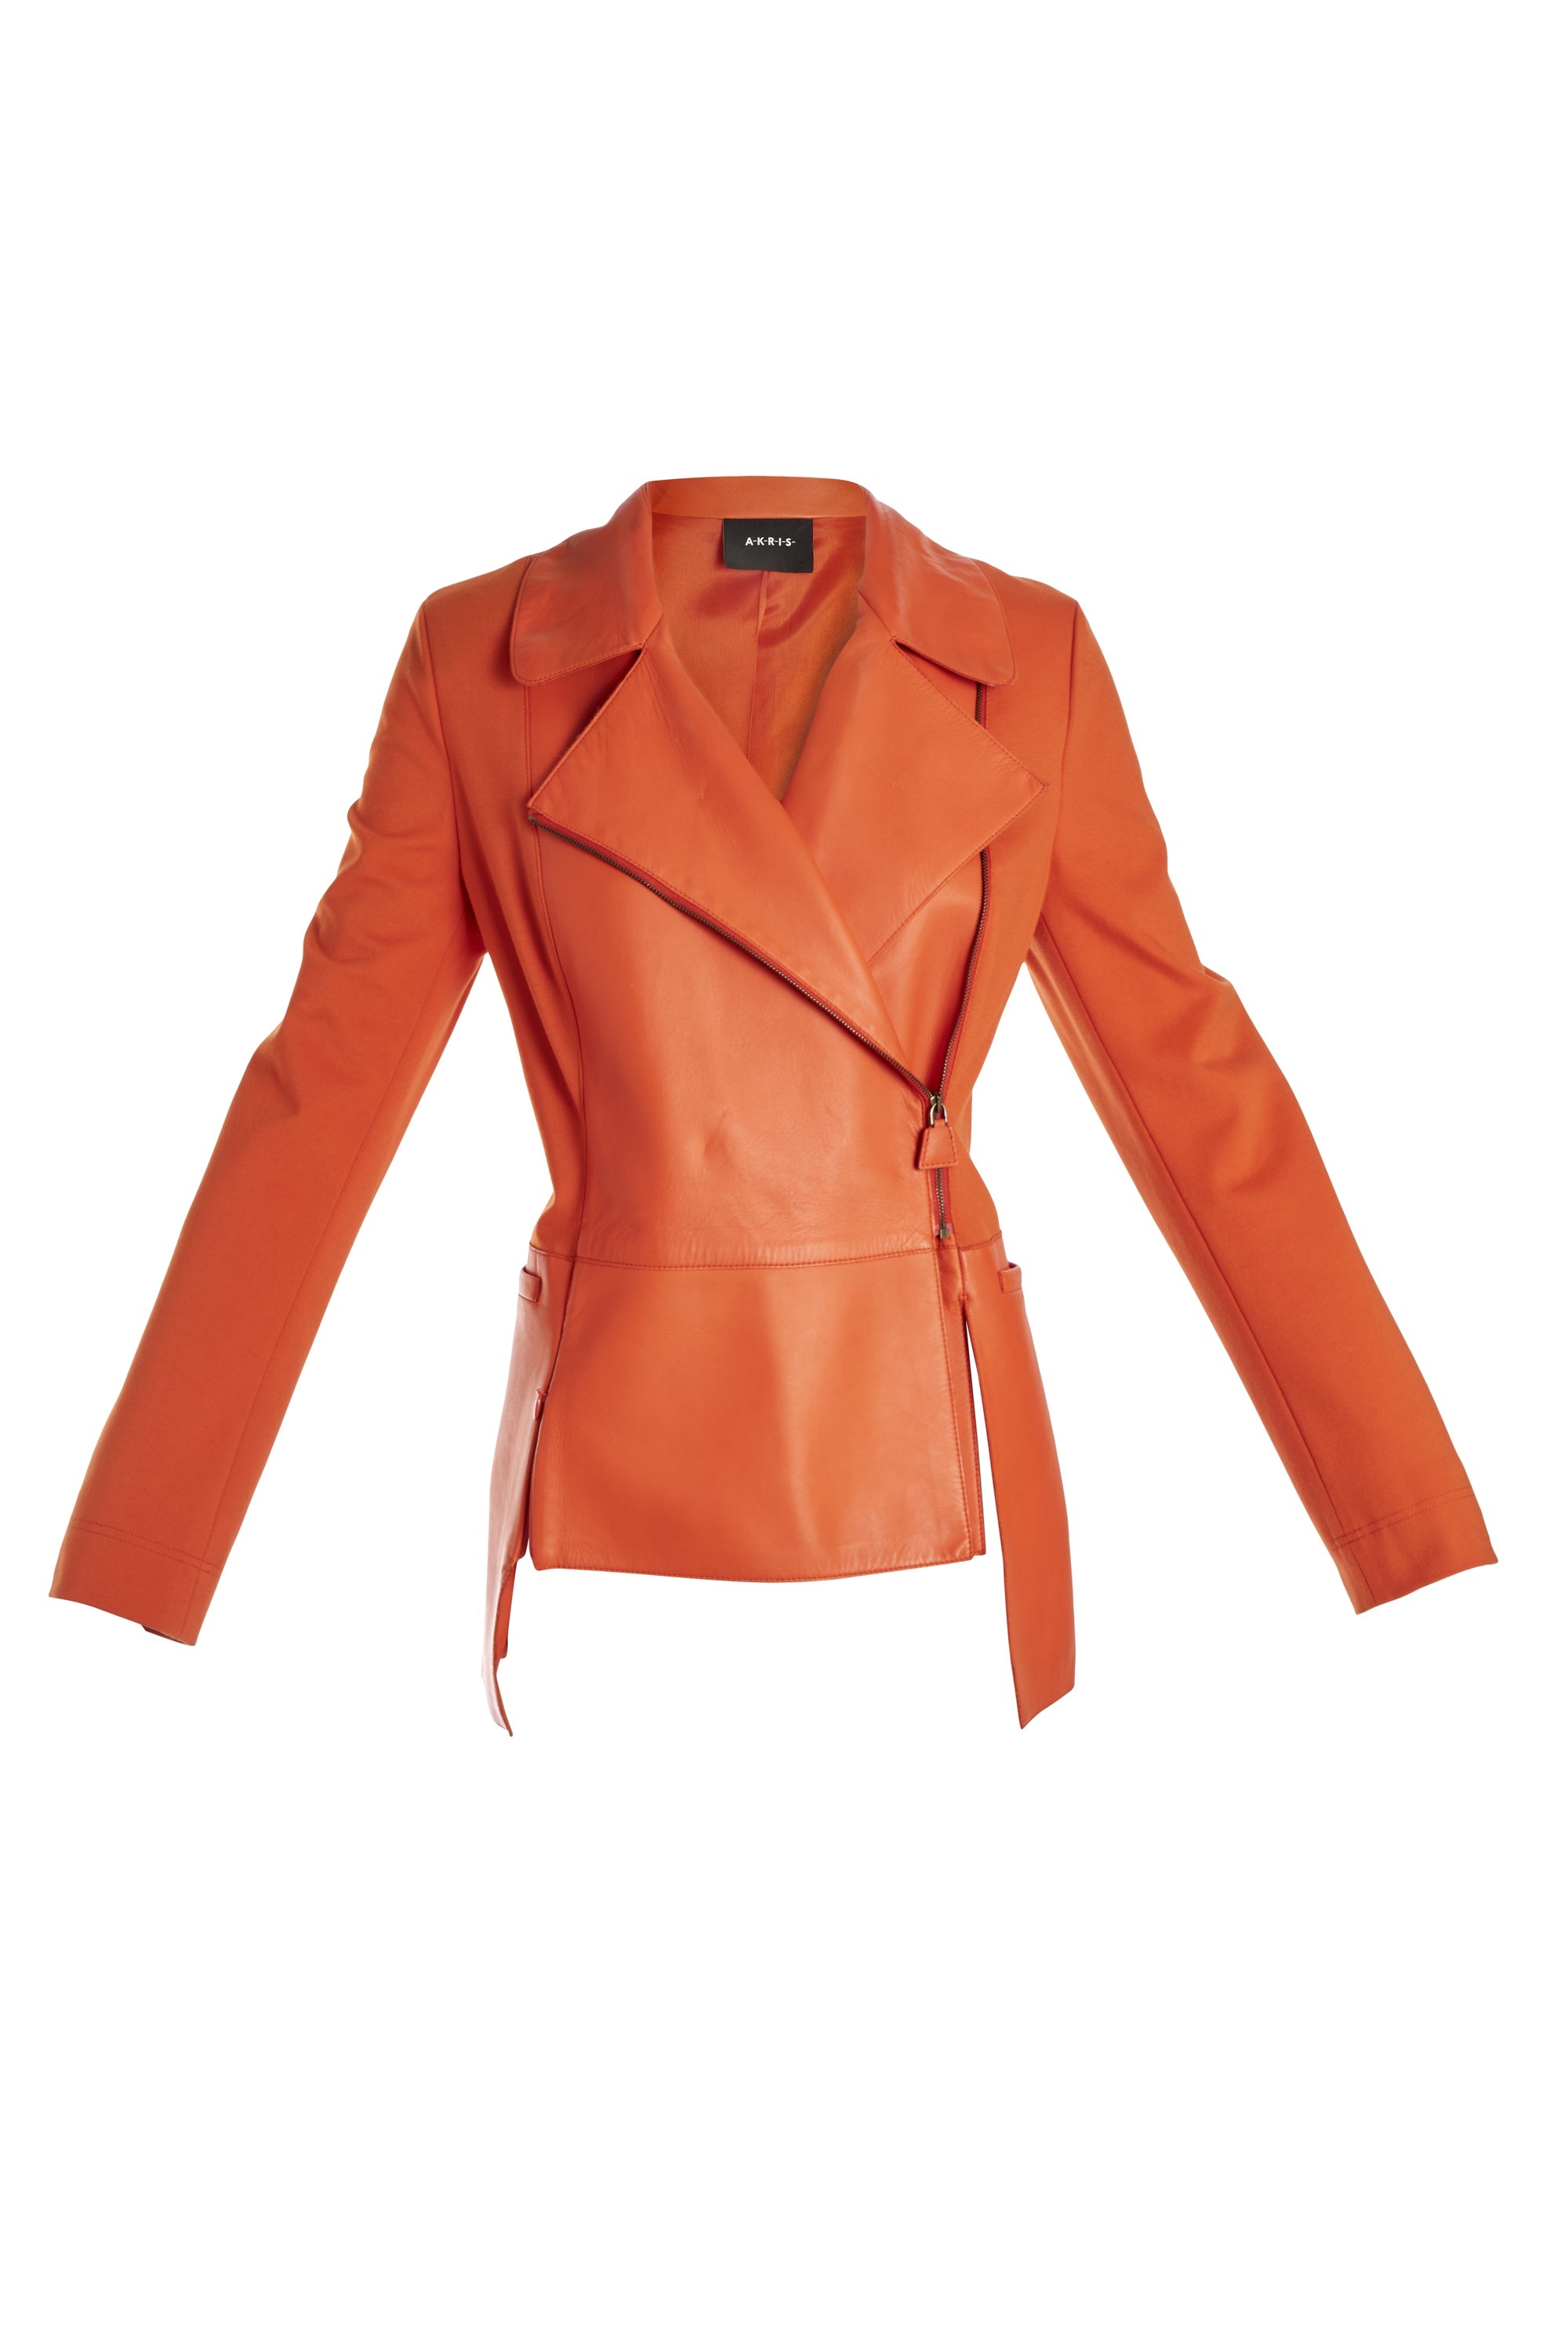 Akris Orange Knit + Leather Jacket